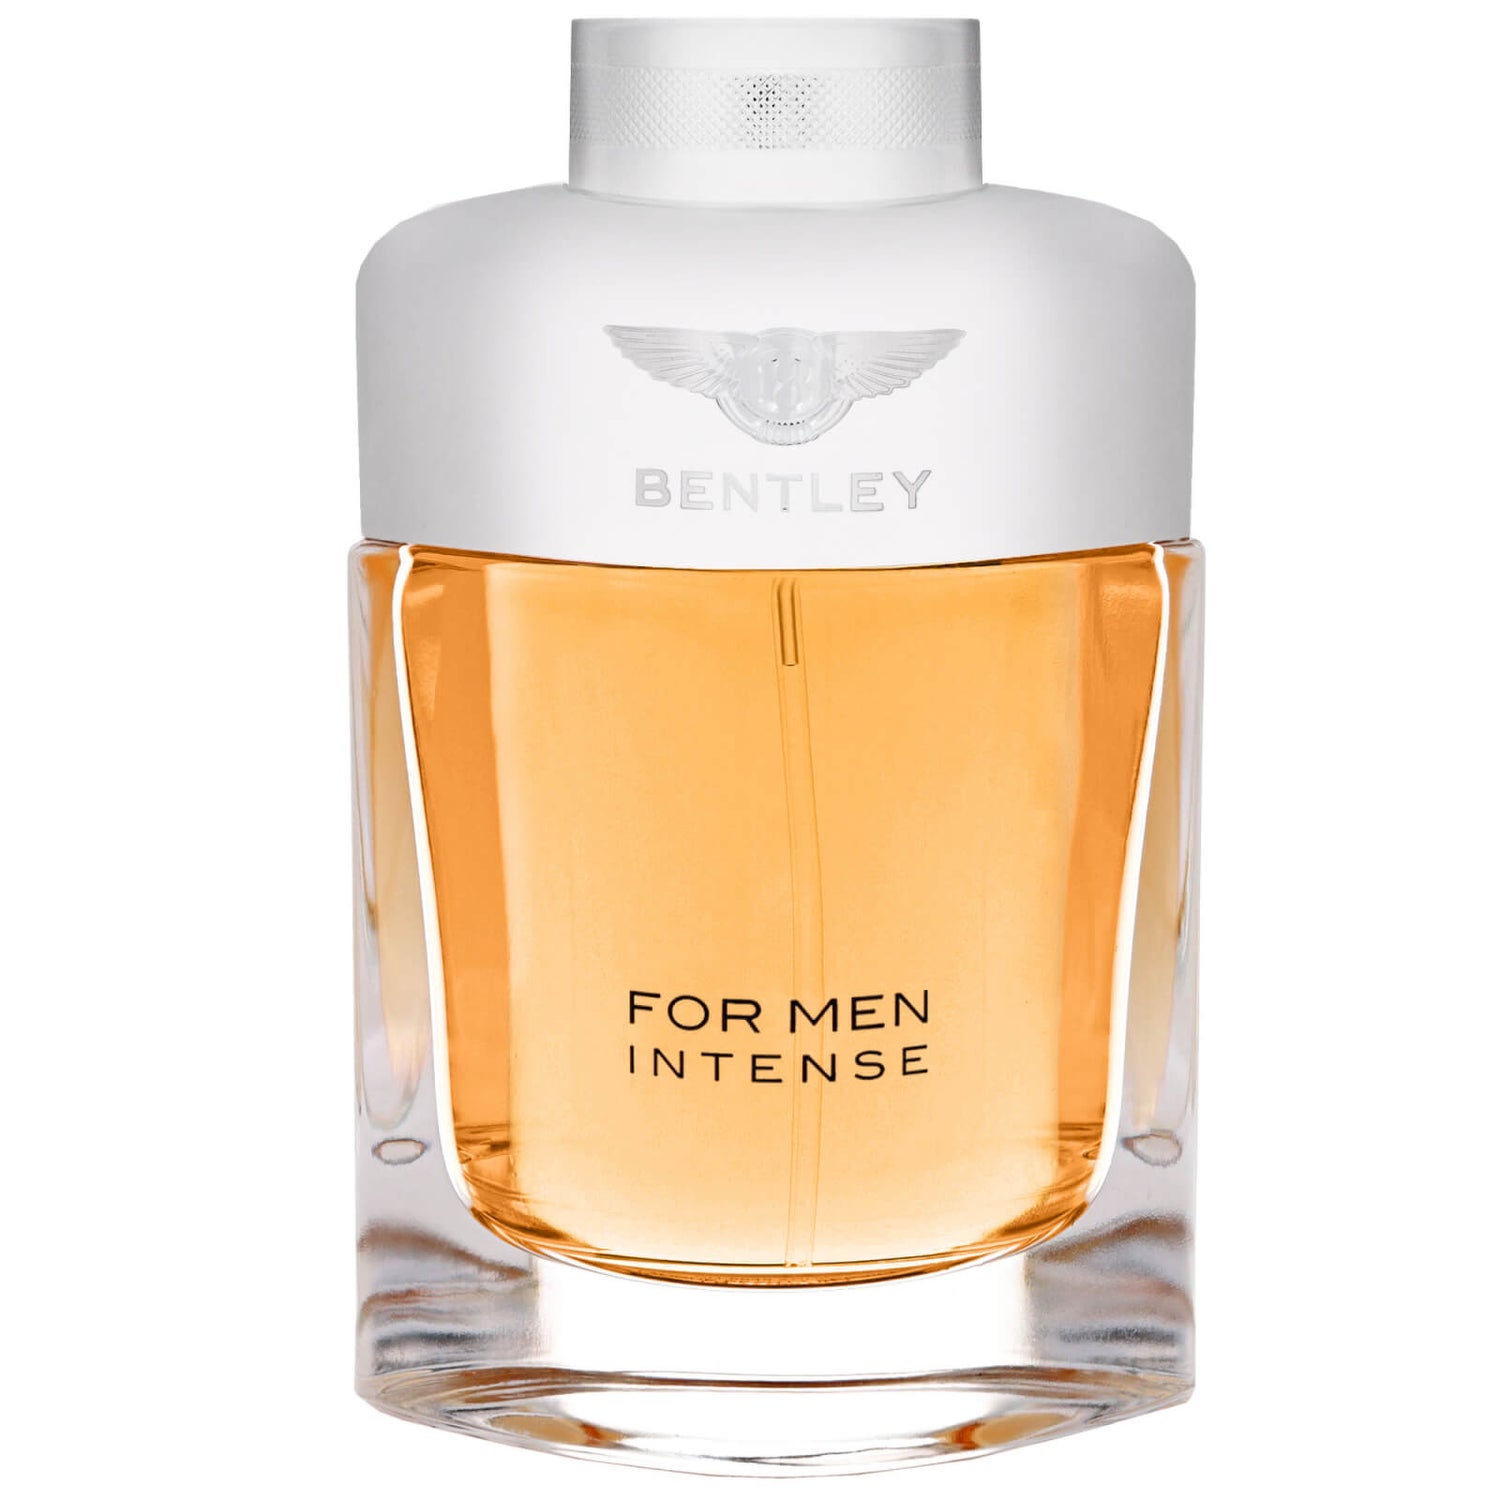 Bentley For Men Intense Eau de Parfum Spray 100ml - allbeauty